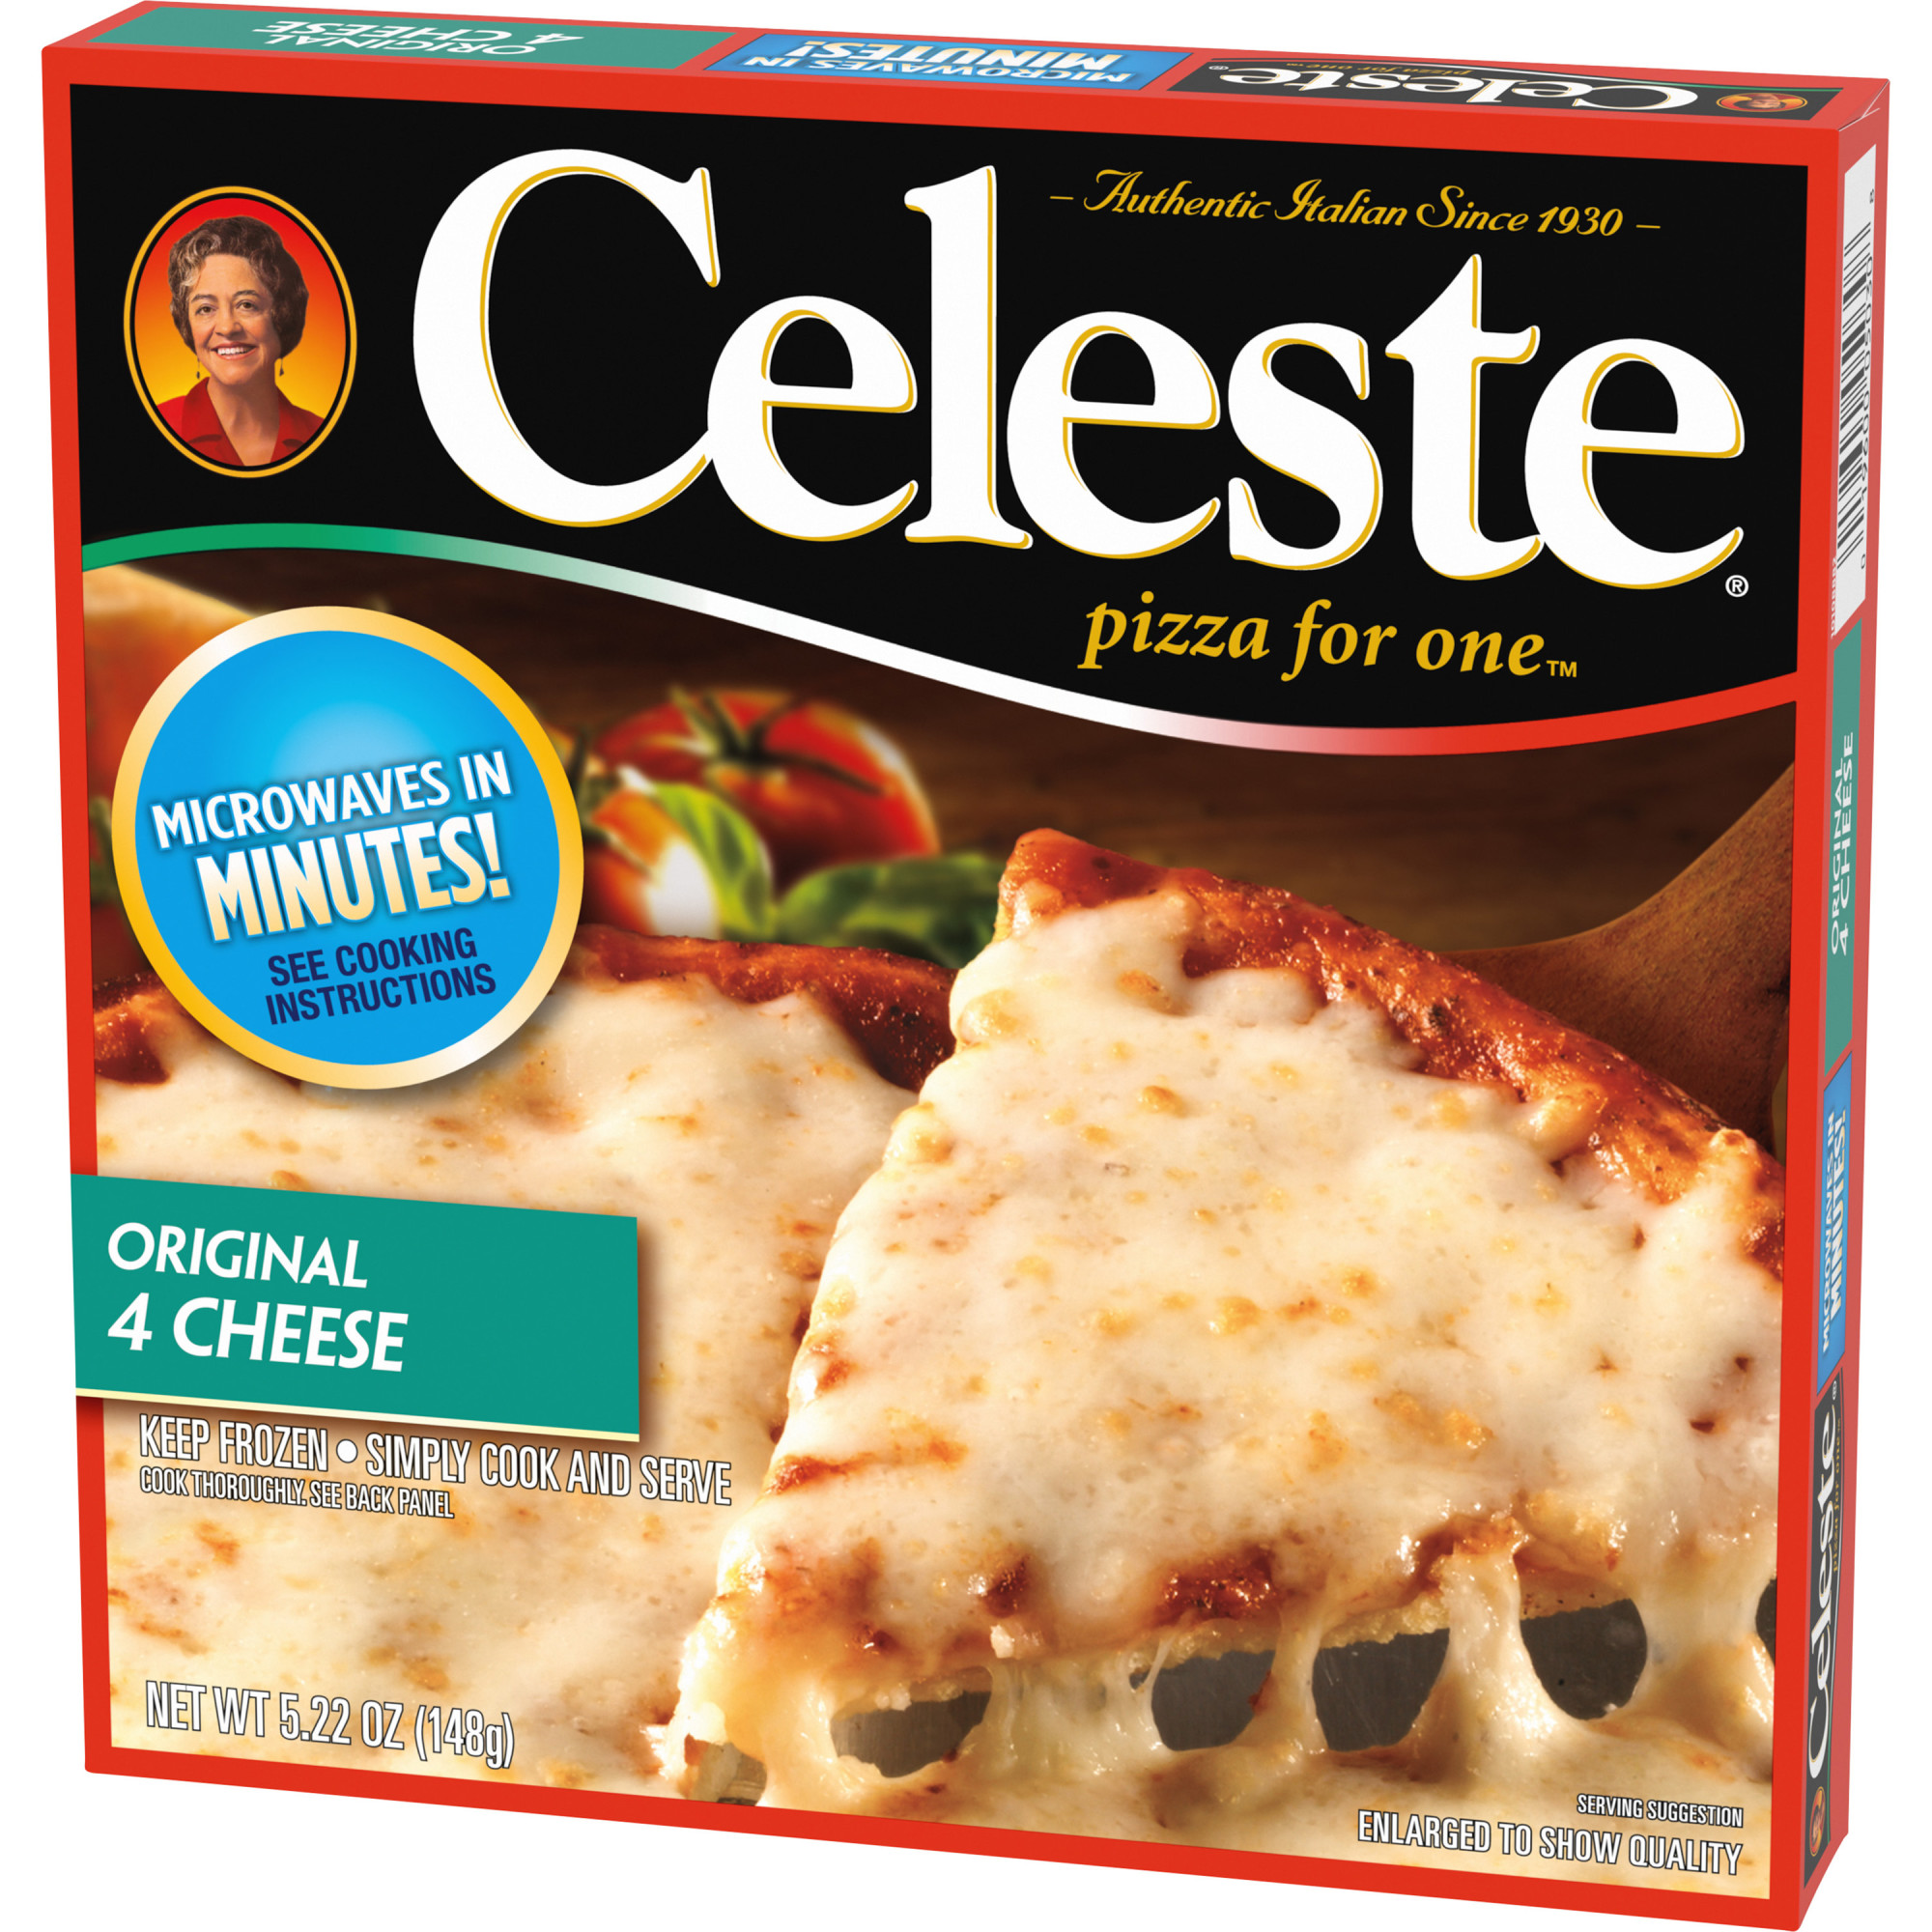 Celeste Original 4 Cheese Microwavable Frozen Pizza, 5.22 oz (Frozen) - image 3 of 6